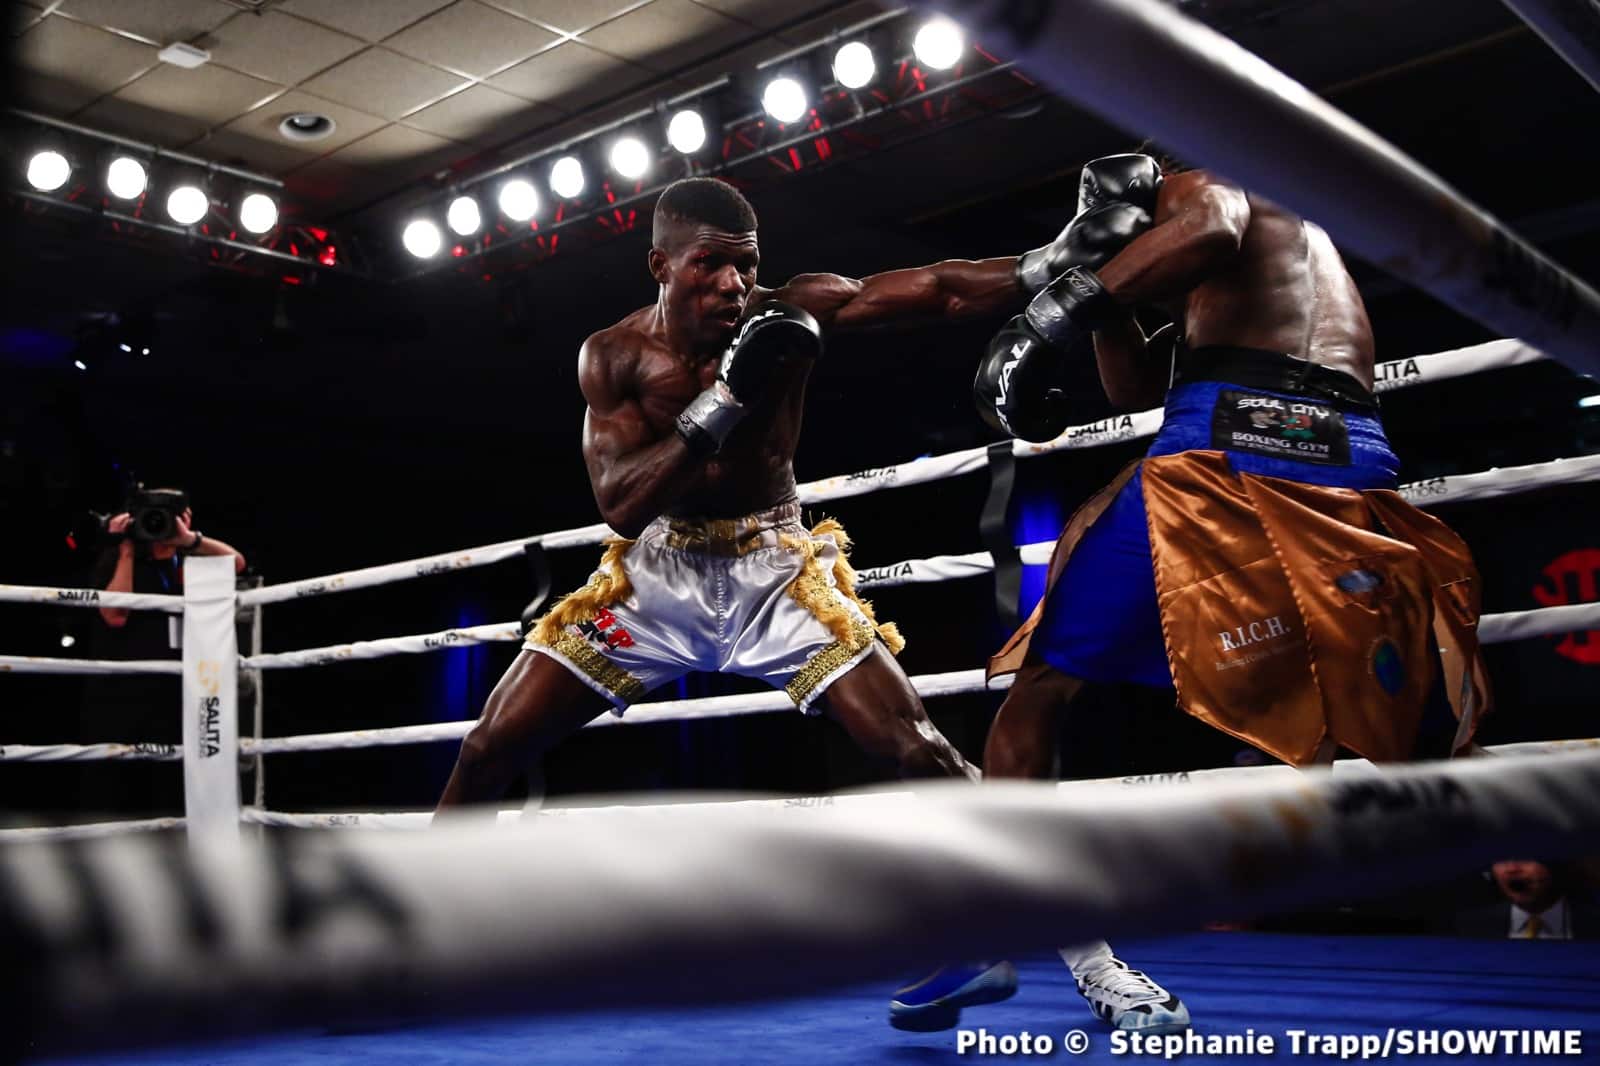 Sena Agbeko Upsets Top Prospect Isaiah Steen - Boxing Results